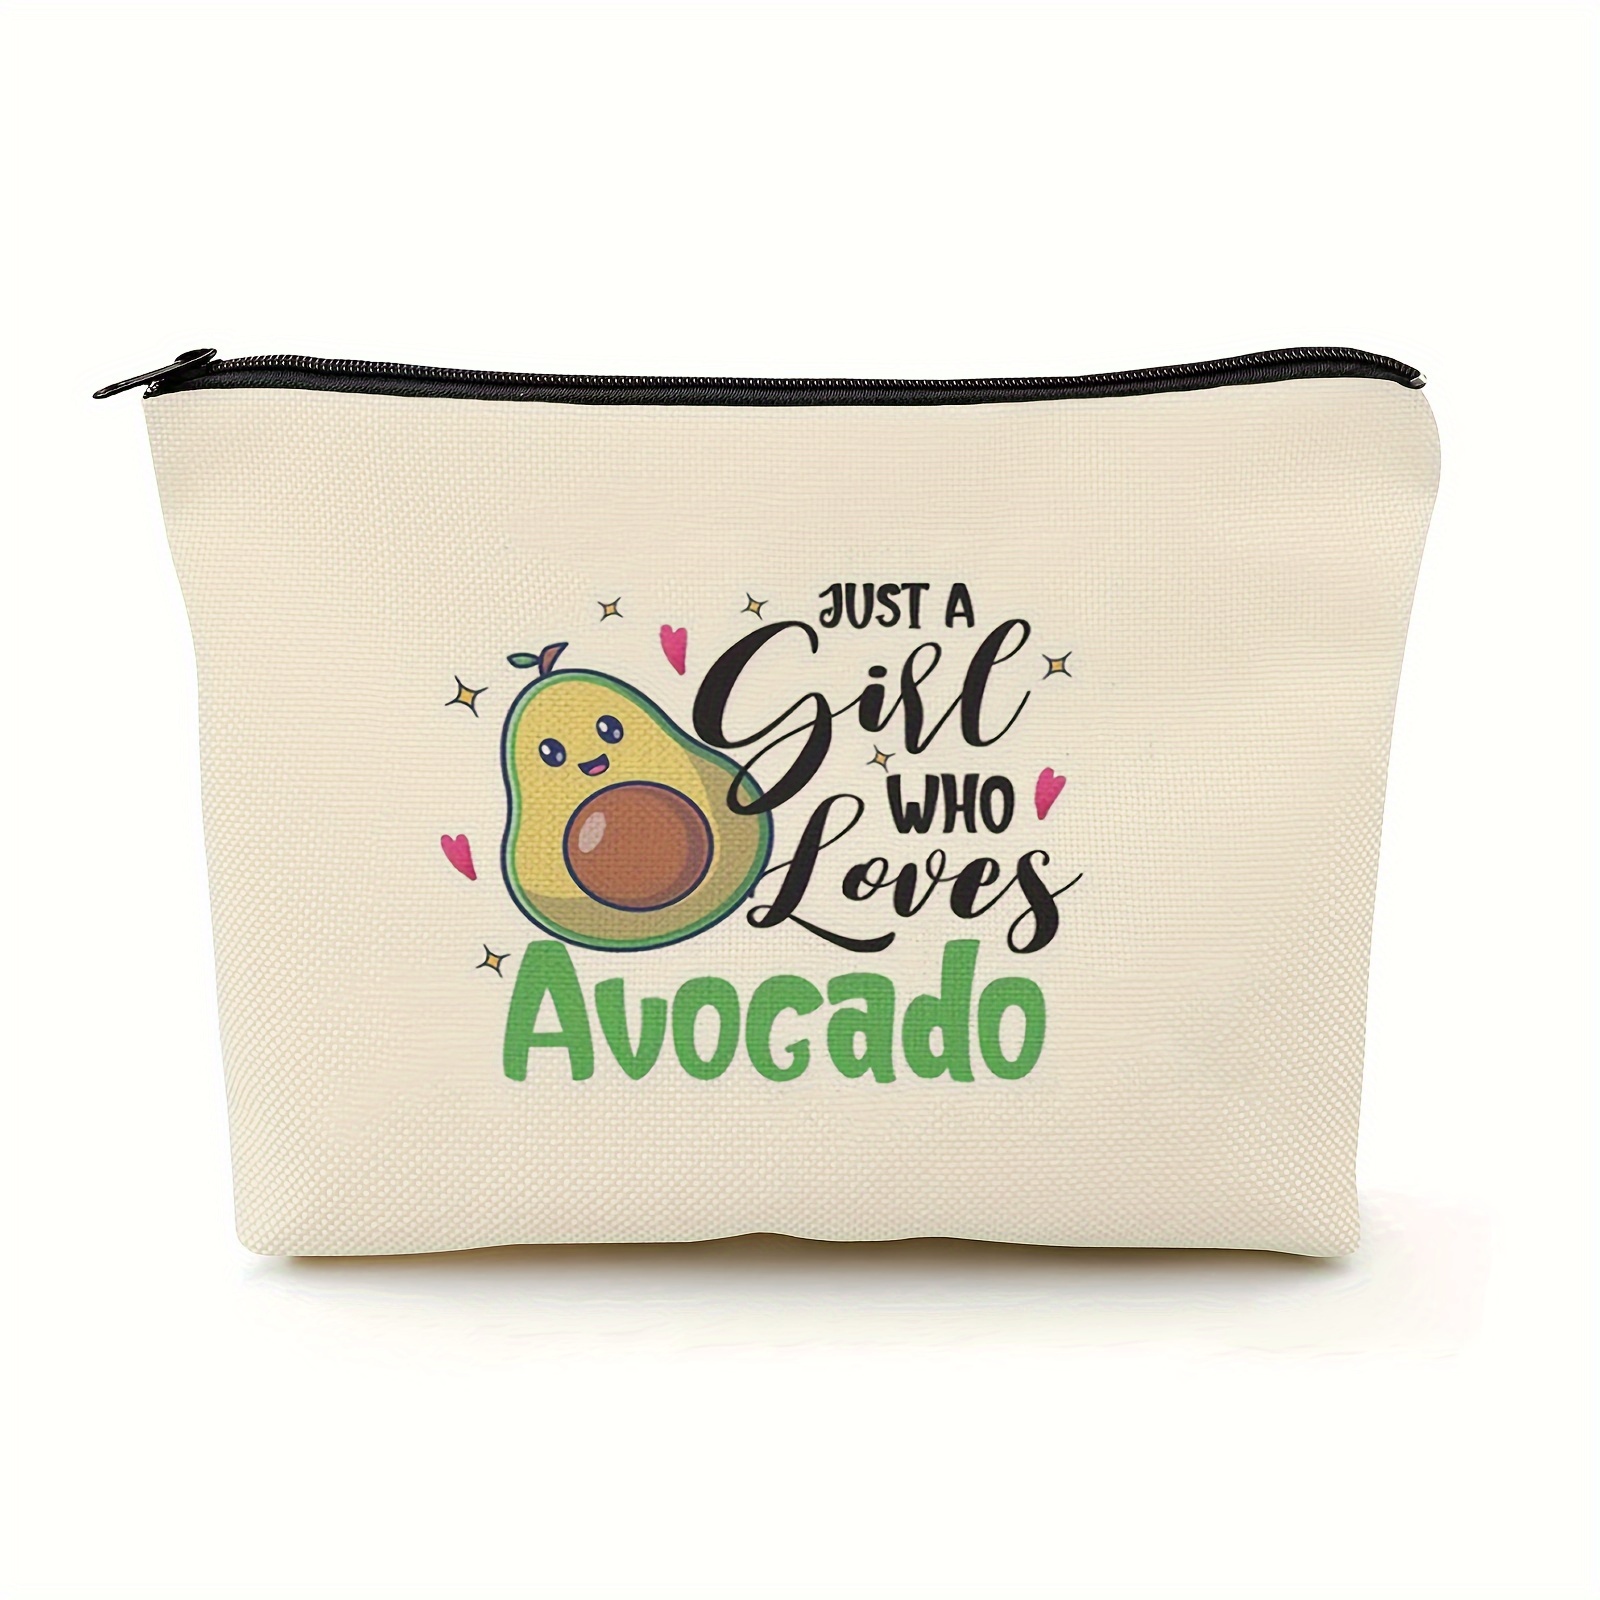 

Avocado Makeup Bag Avocado Gift Fruit Lover Gift Just Who A Who Loves Avocado Cosmetic Bag For Avocado Lovers